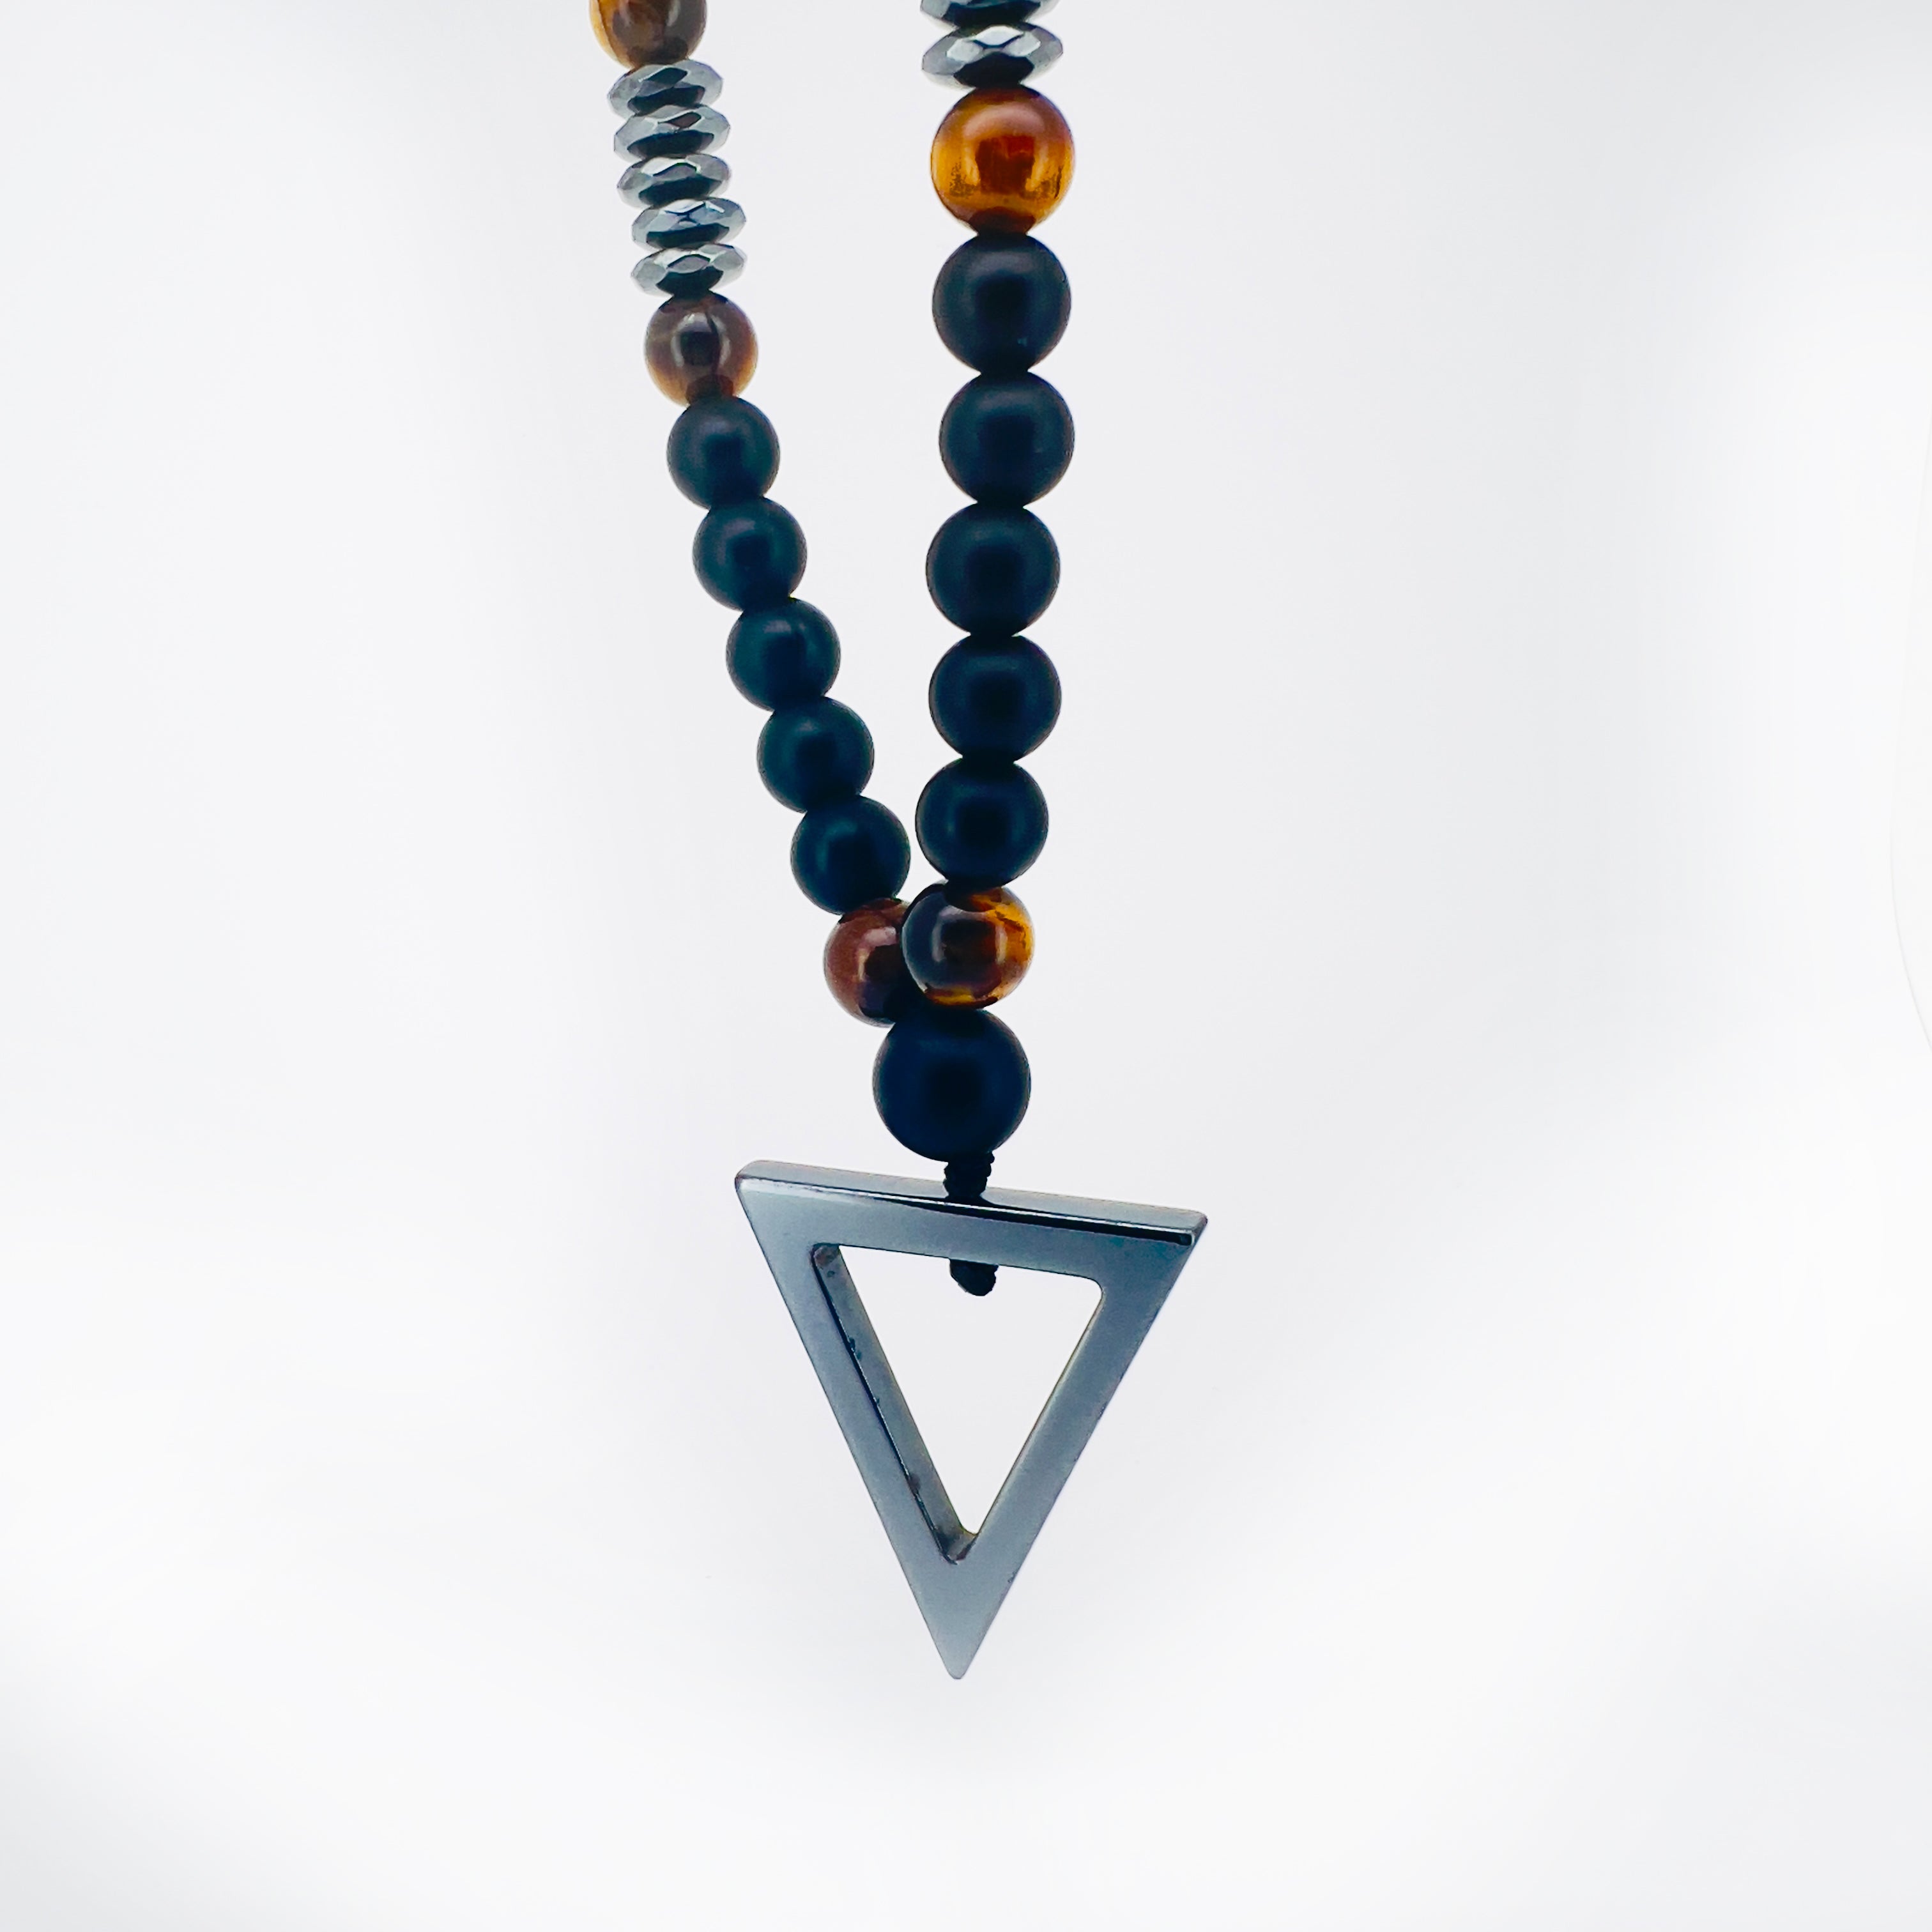 Soeren Beaded Hematite Necklace with Triangle Pendant